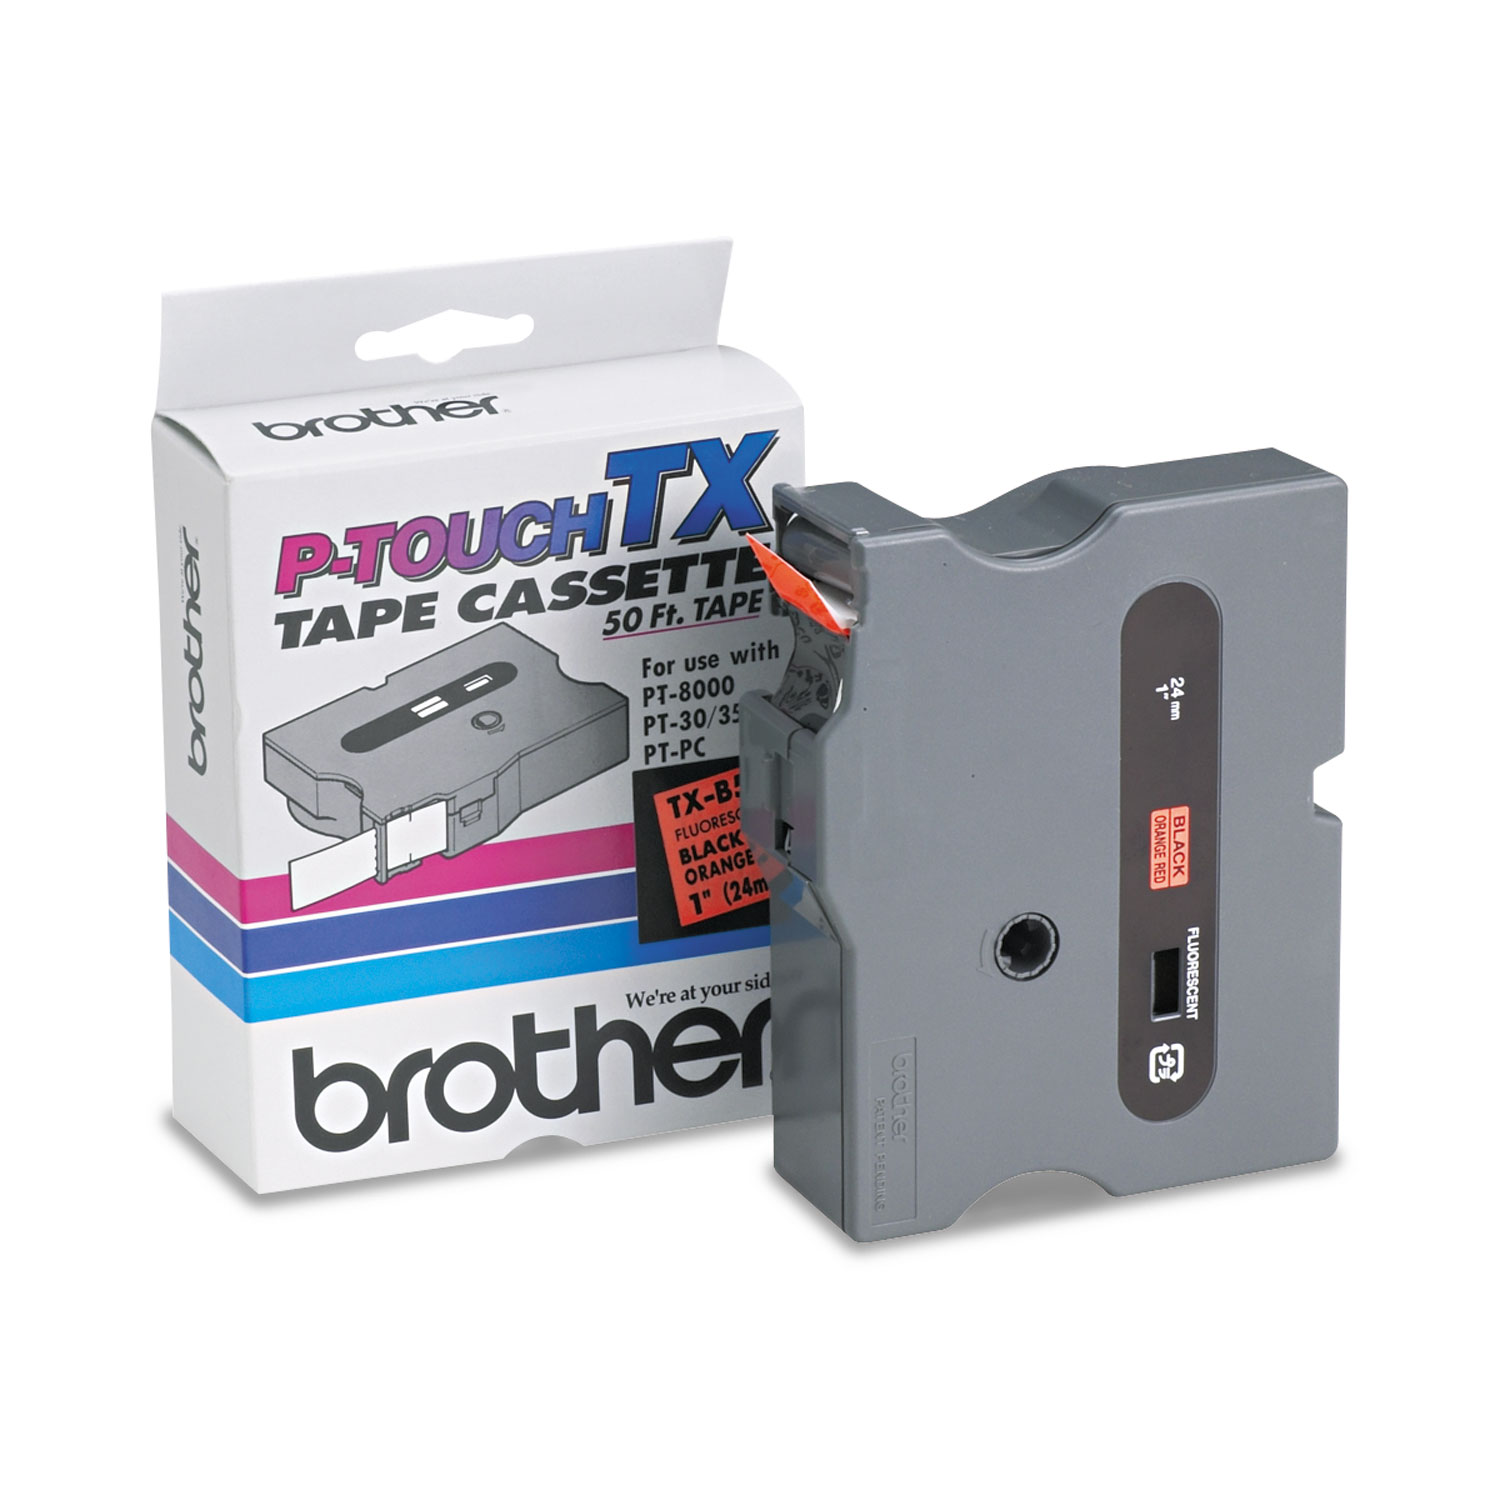  Brother P-Touch TXB511 TX Tape Cartridge for PT-8000, PT-PC, PT-30/35, 0.94 x 50 ft, Black on Fluorescent Orange (BRTTXB511) 